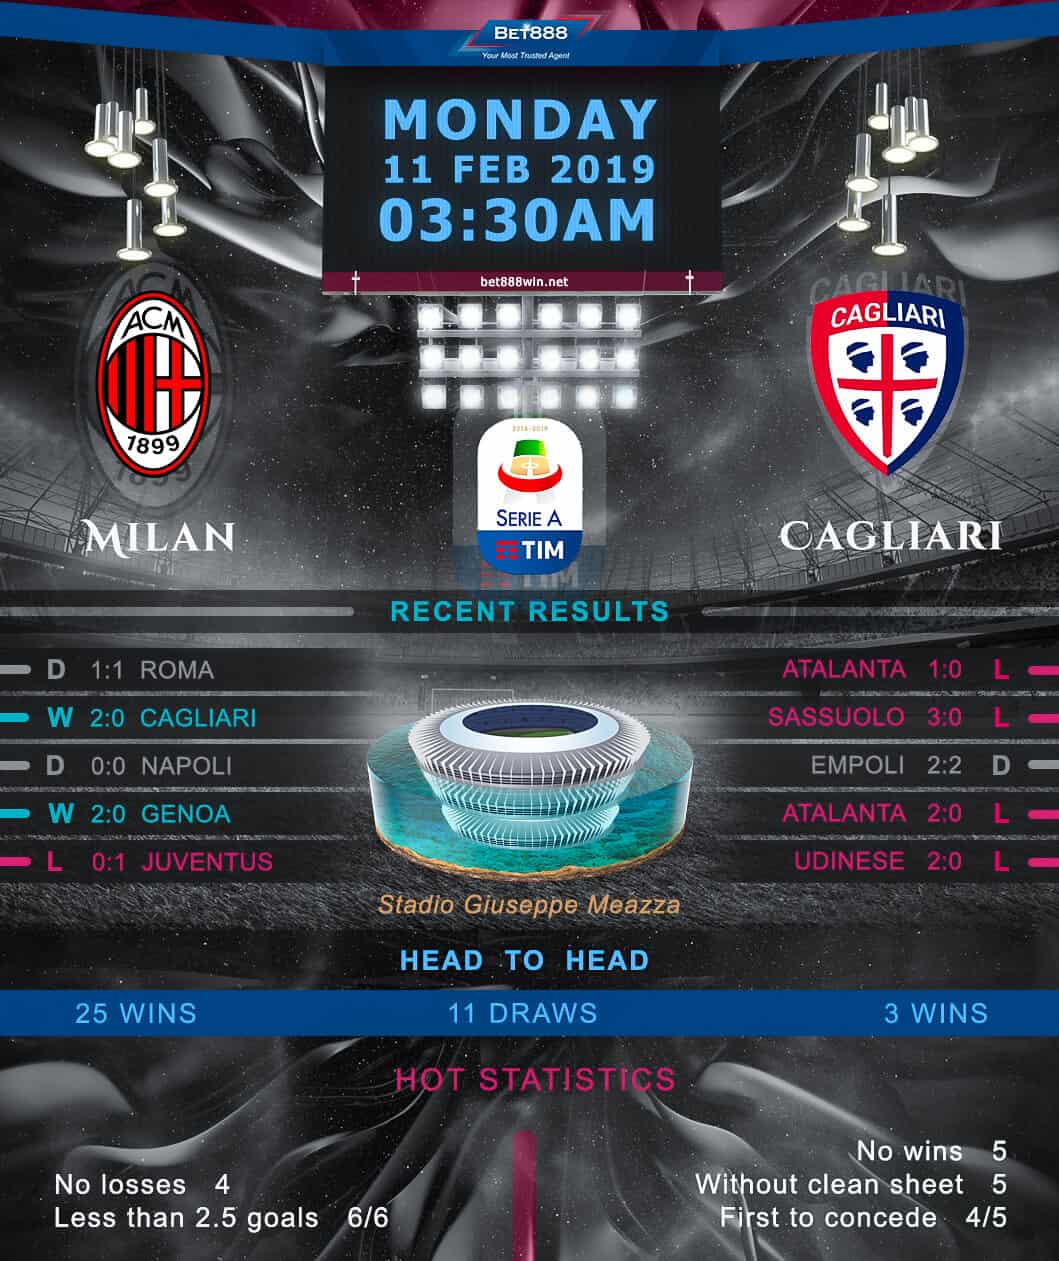 AC Milan vs Cagliari 11/02/19